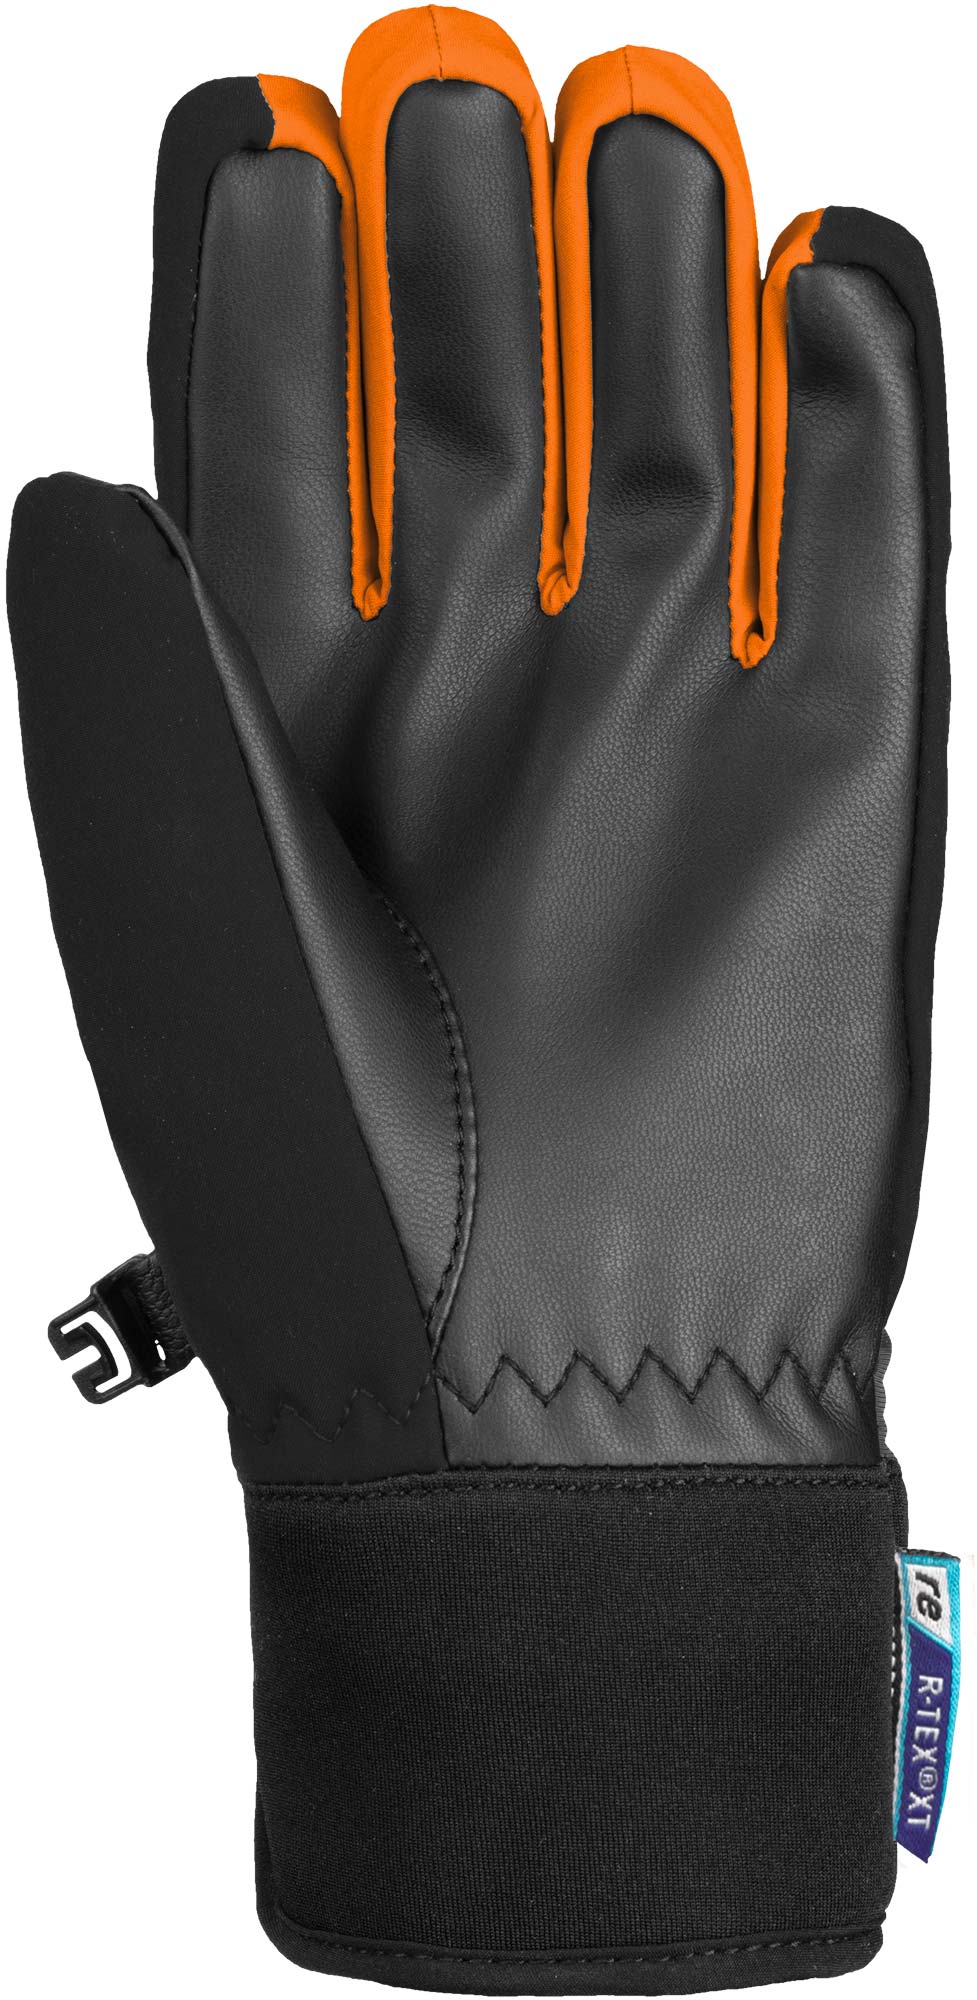 Junior ski gloves